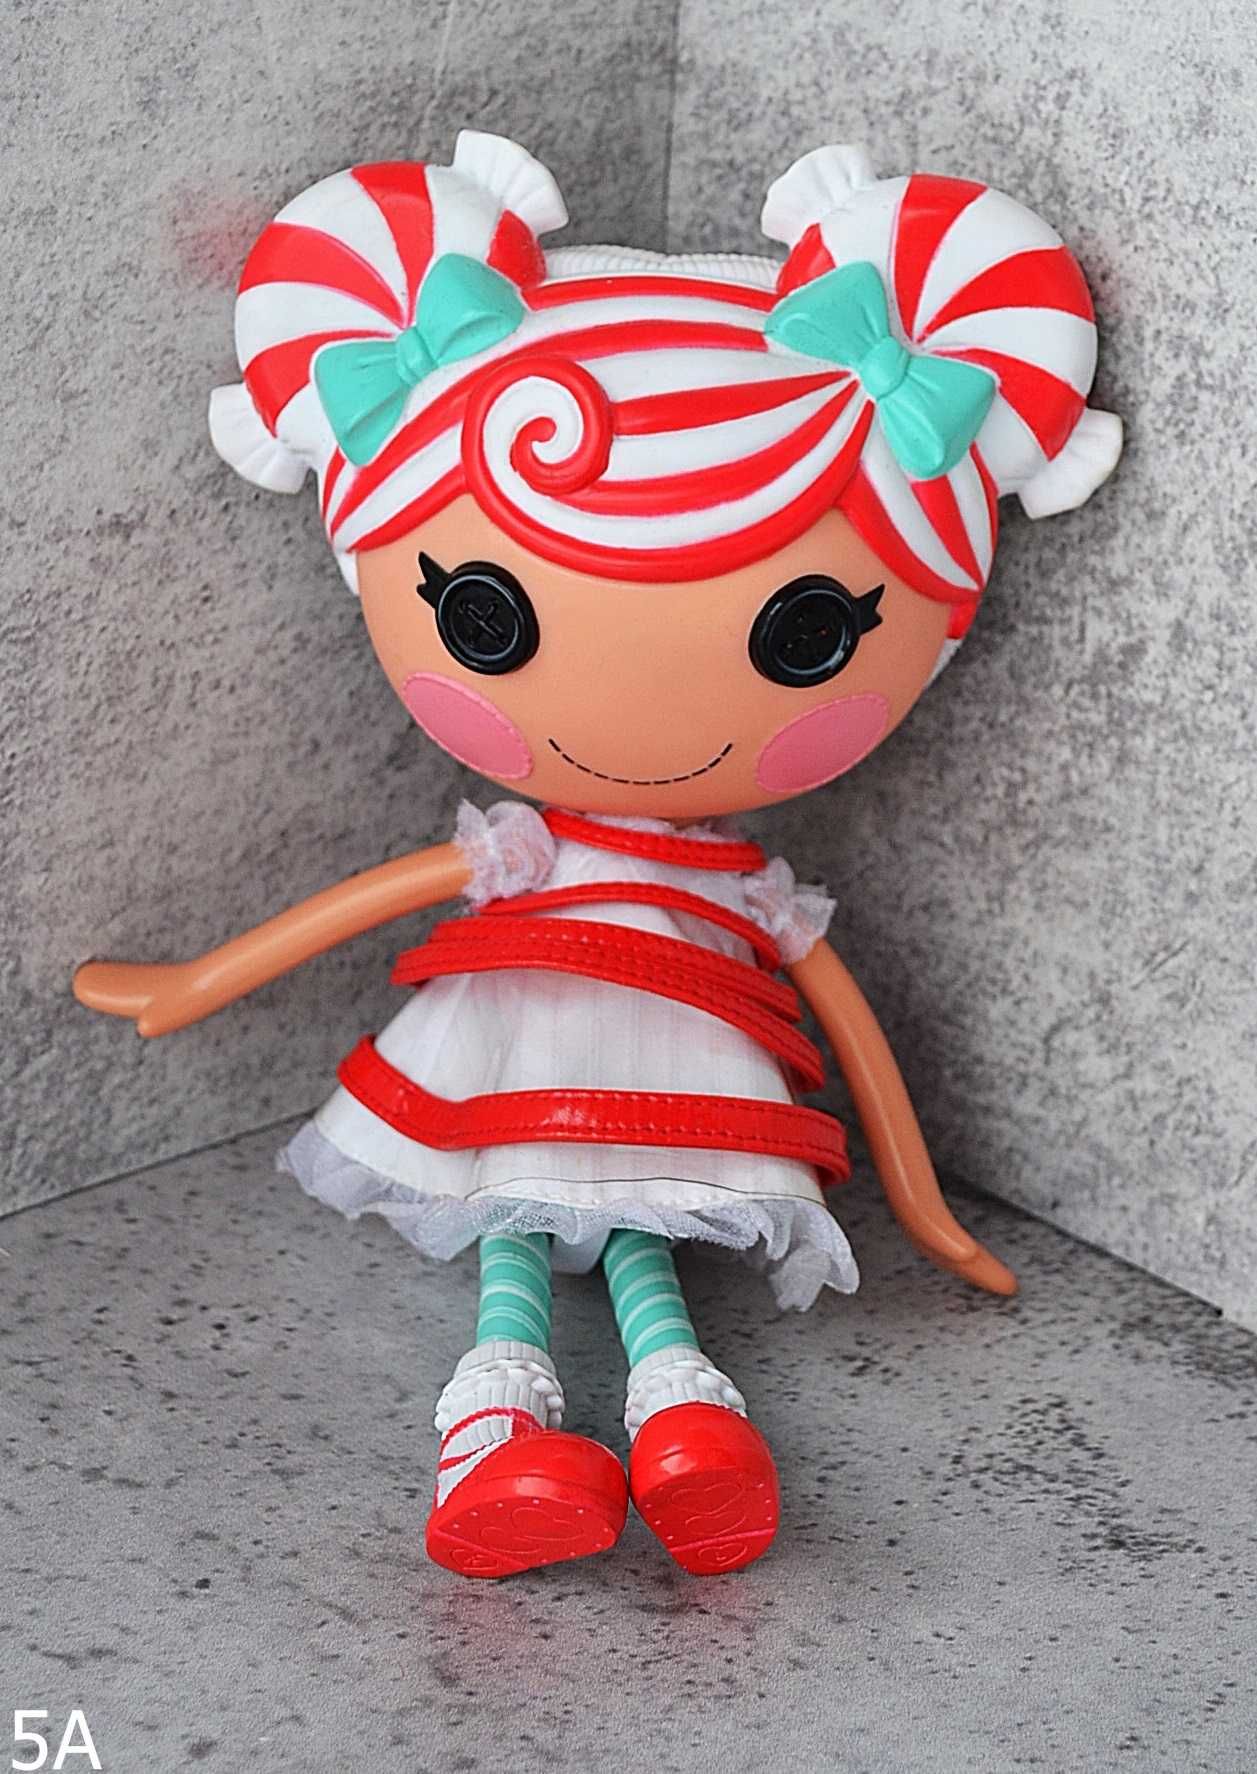 Кукла оригинал Лалалупси от MGA фирменная кукла - конфетка